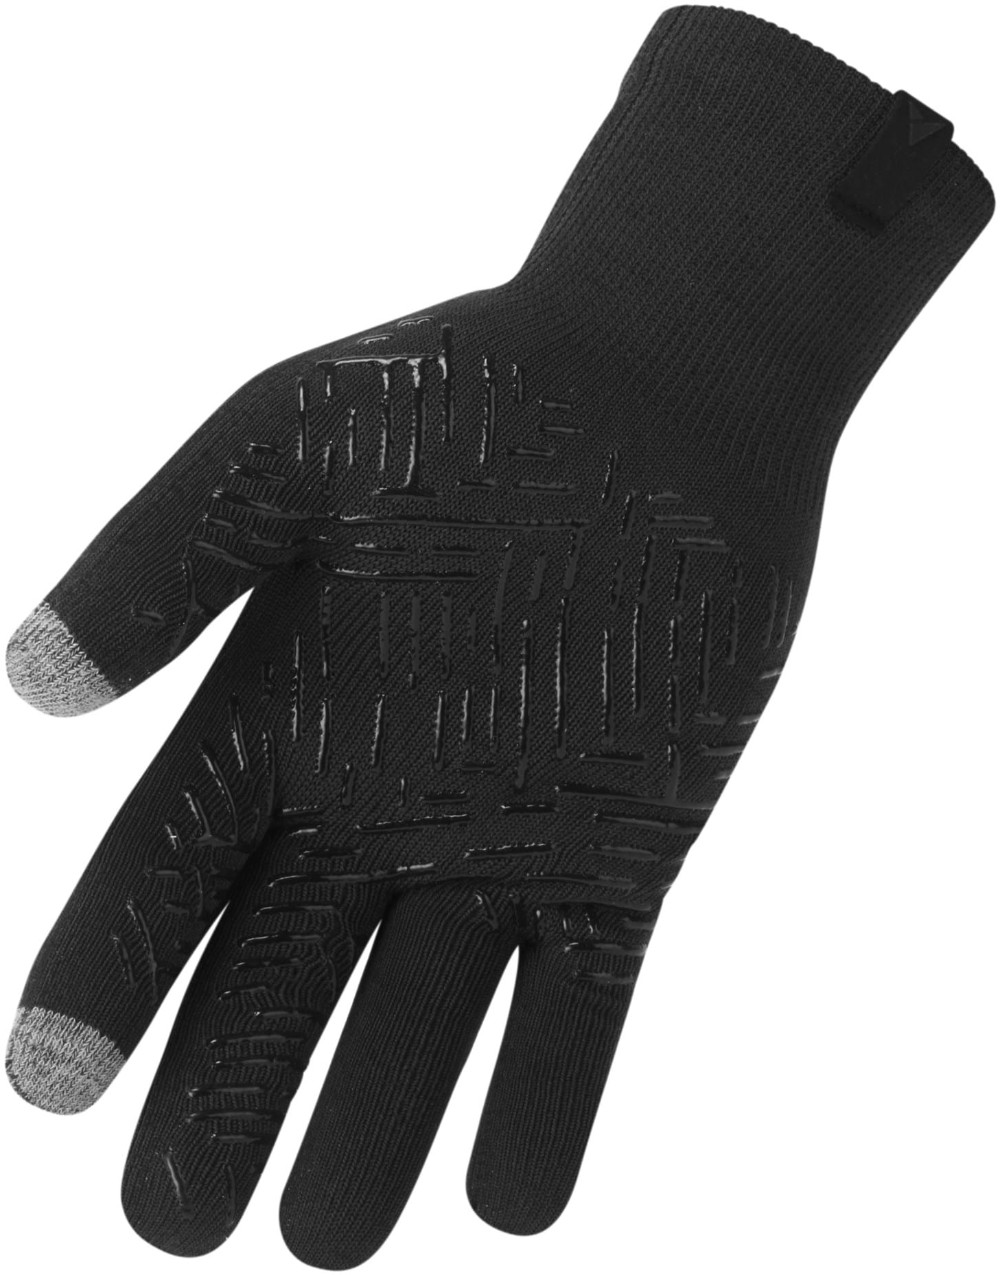 All Roads Waterproof Long Finger Gloves image 1